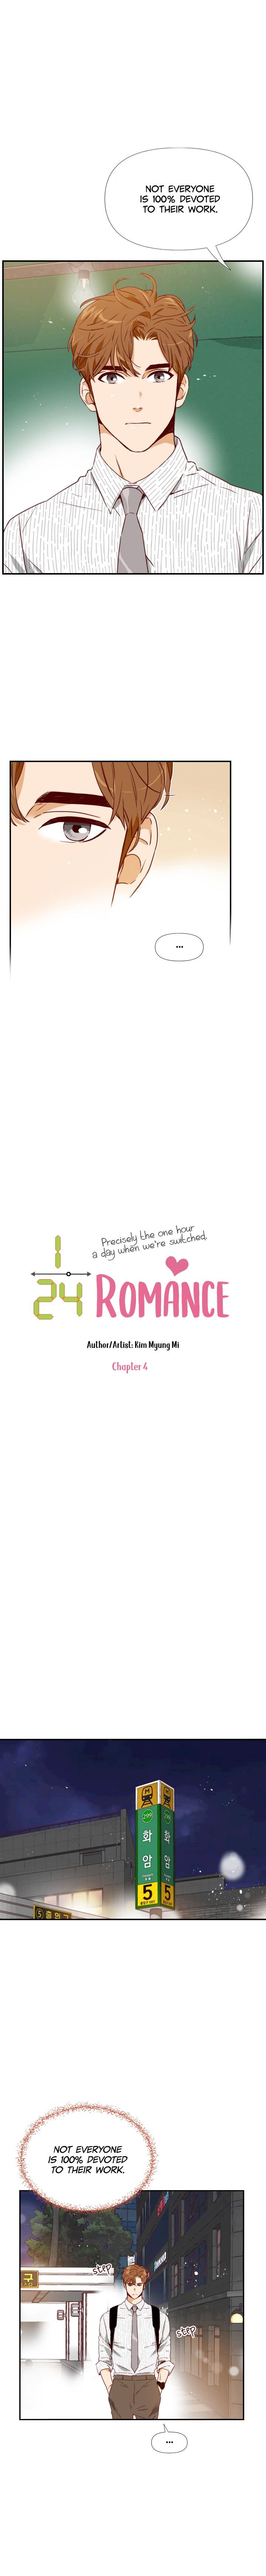 1/24 Romance Chapter 4 - Page 6